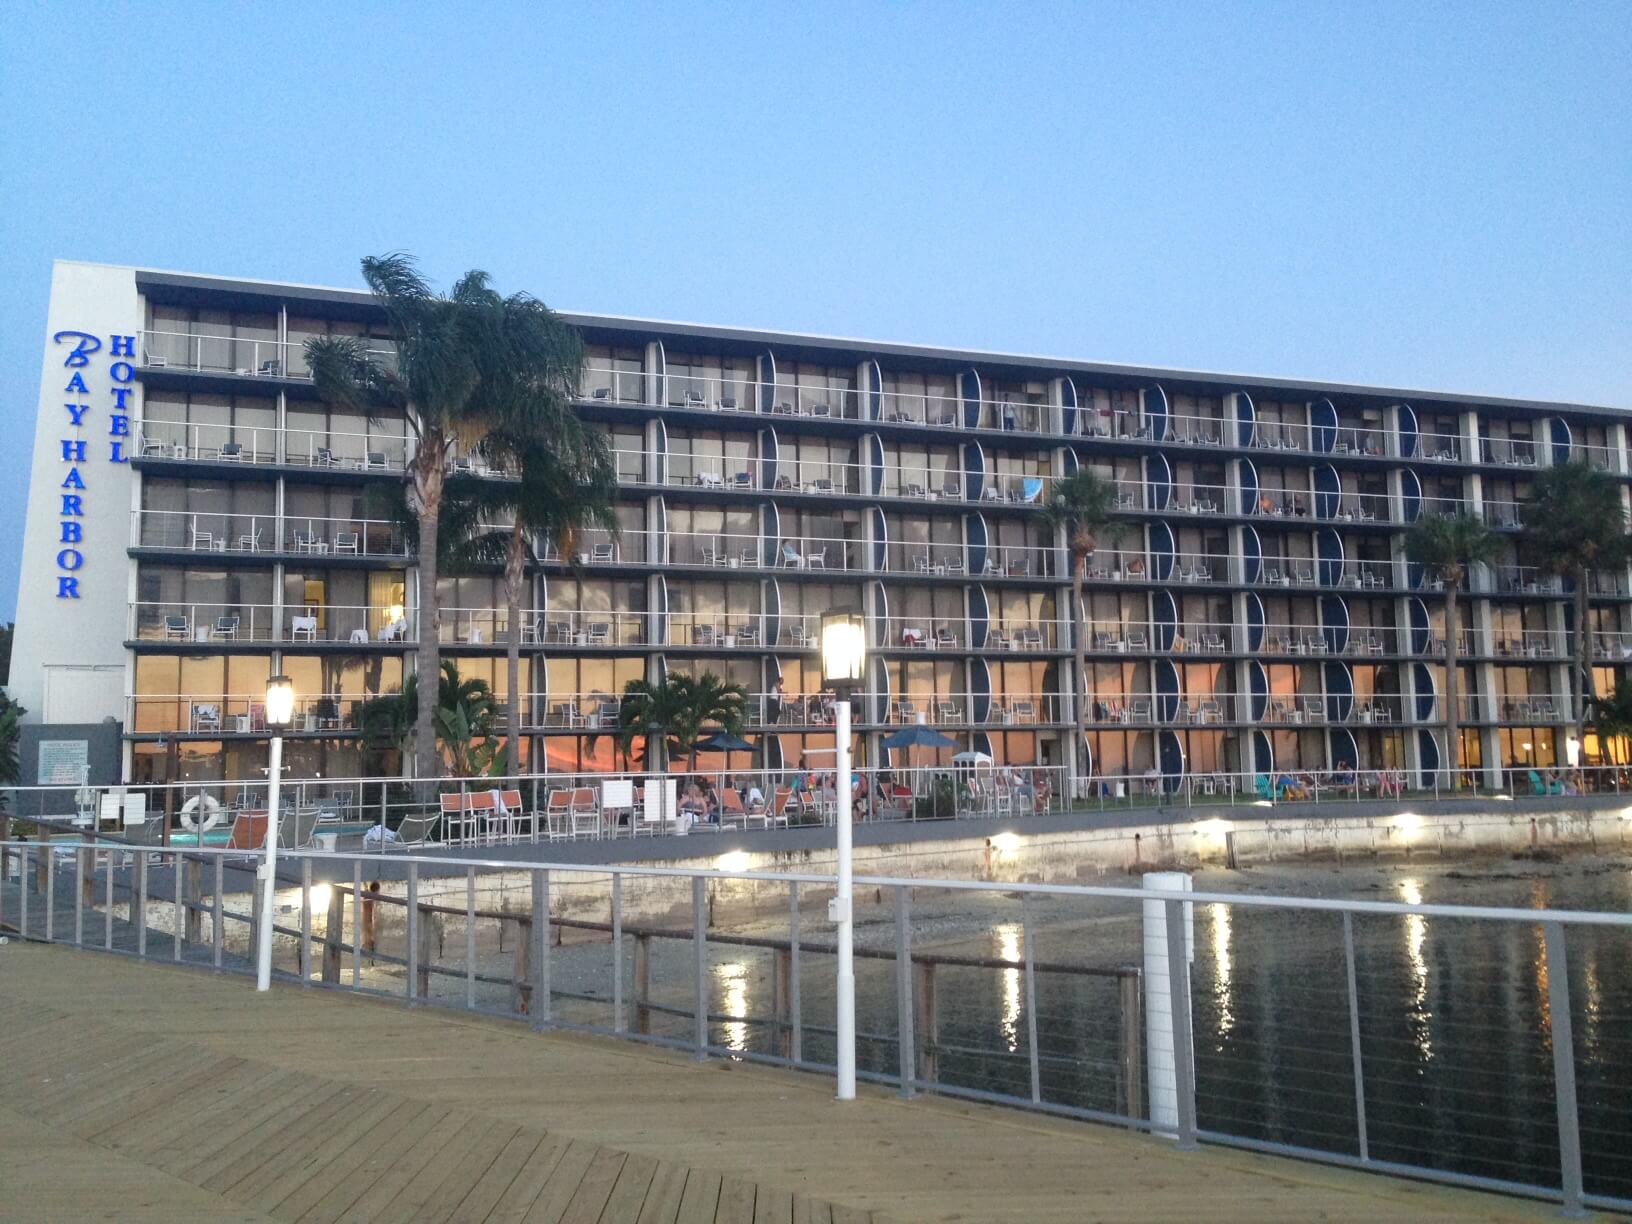 Bay Harbor Hotel on Tampa Bay, Florida.